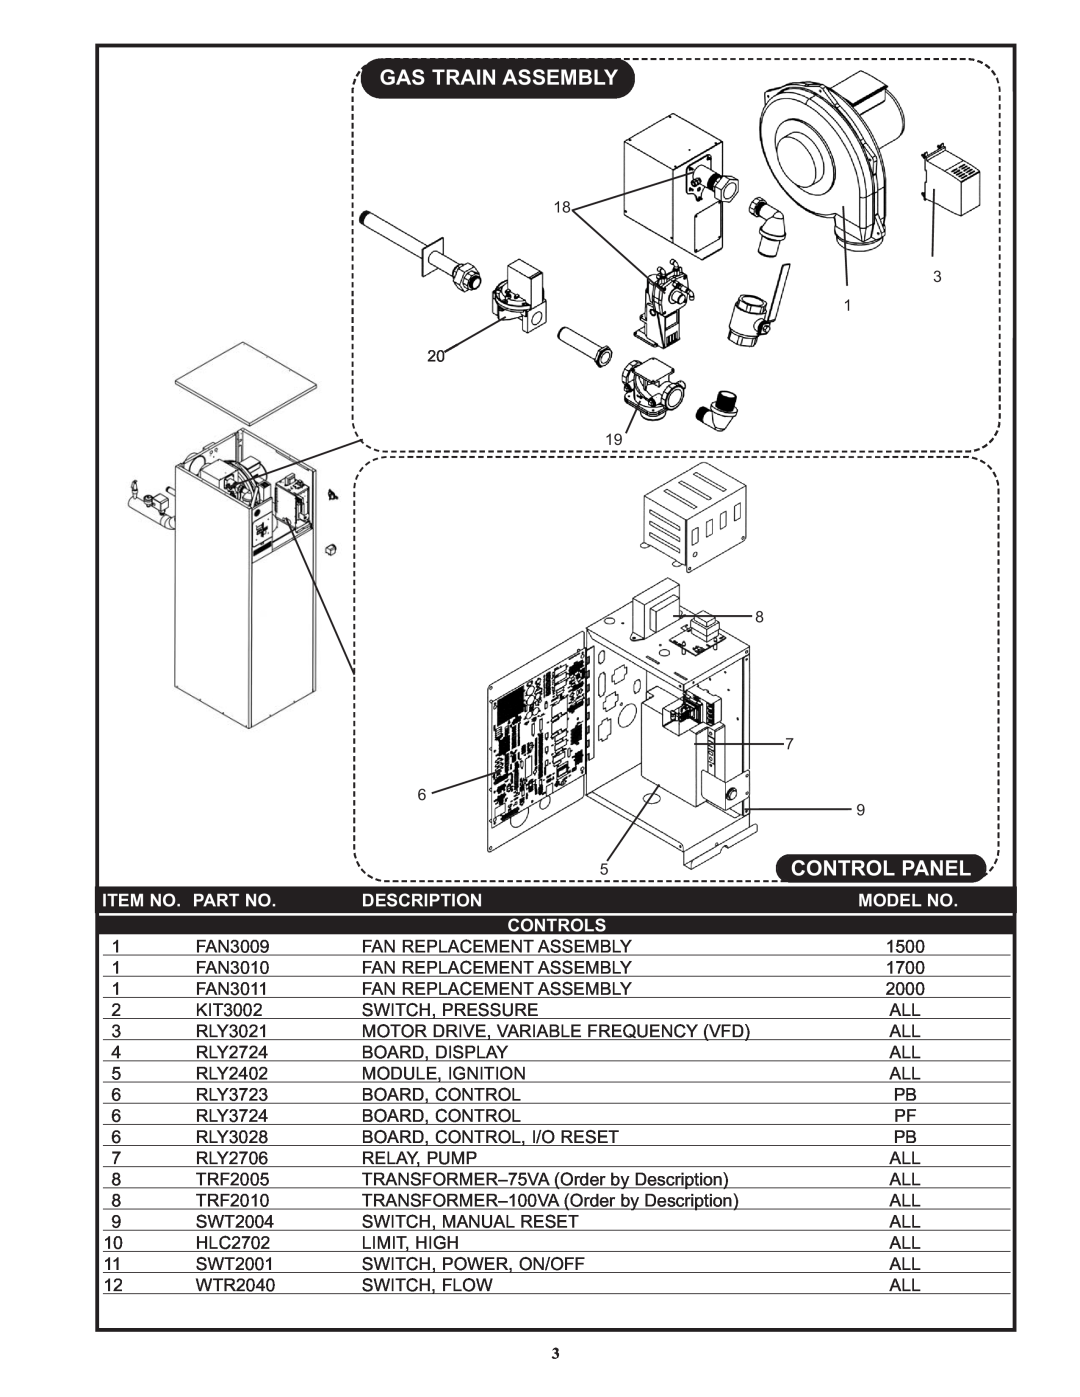 Lochinvar PFR-06 manual Item No. Part No, Description, Model No, Controls, Gas Train Assembly, Control Panel 